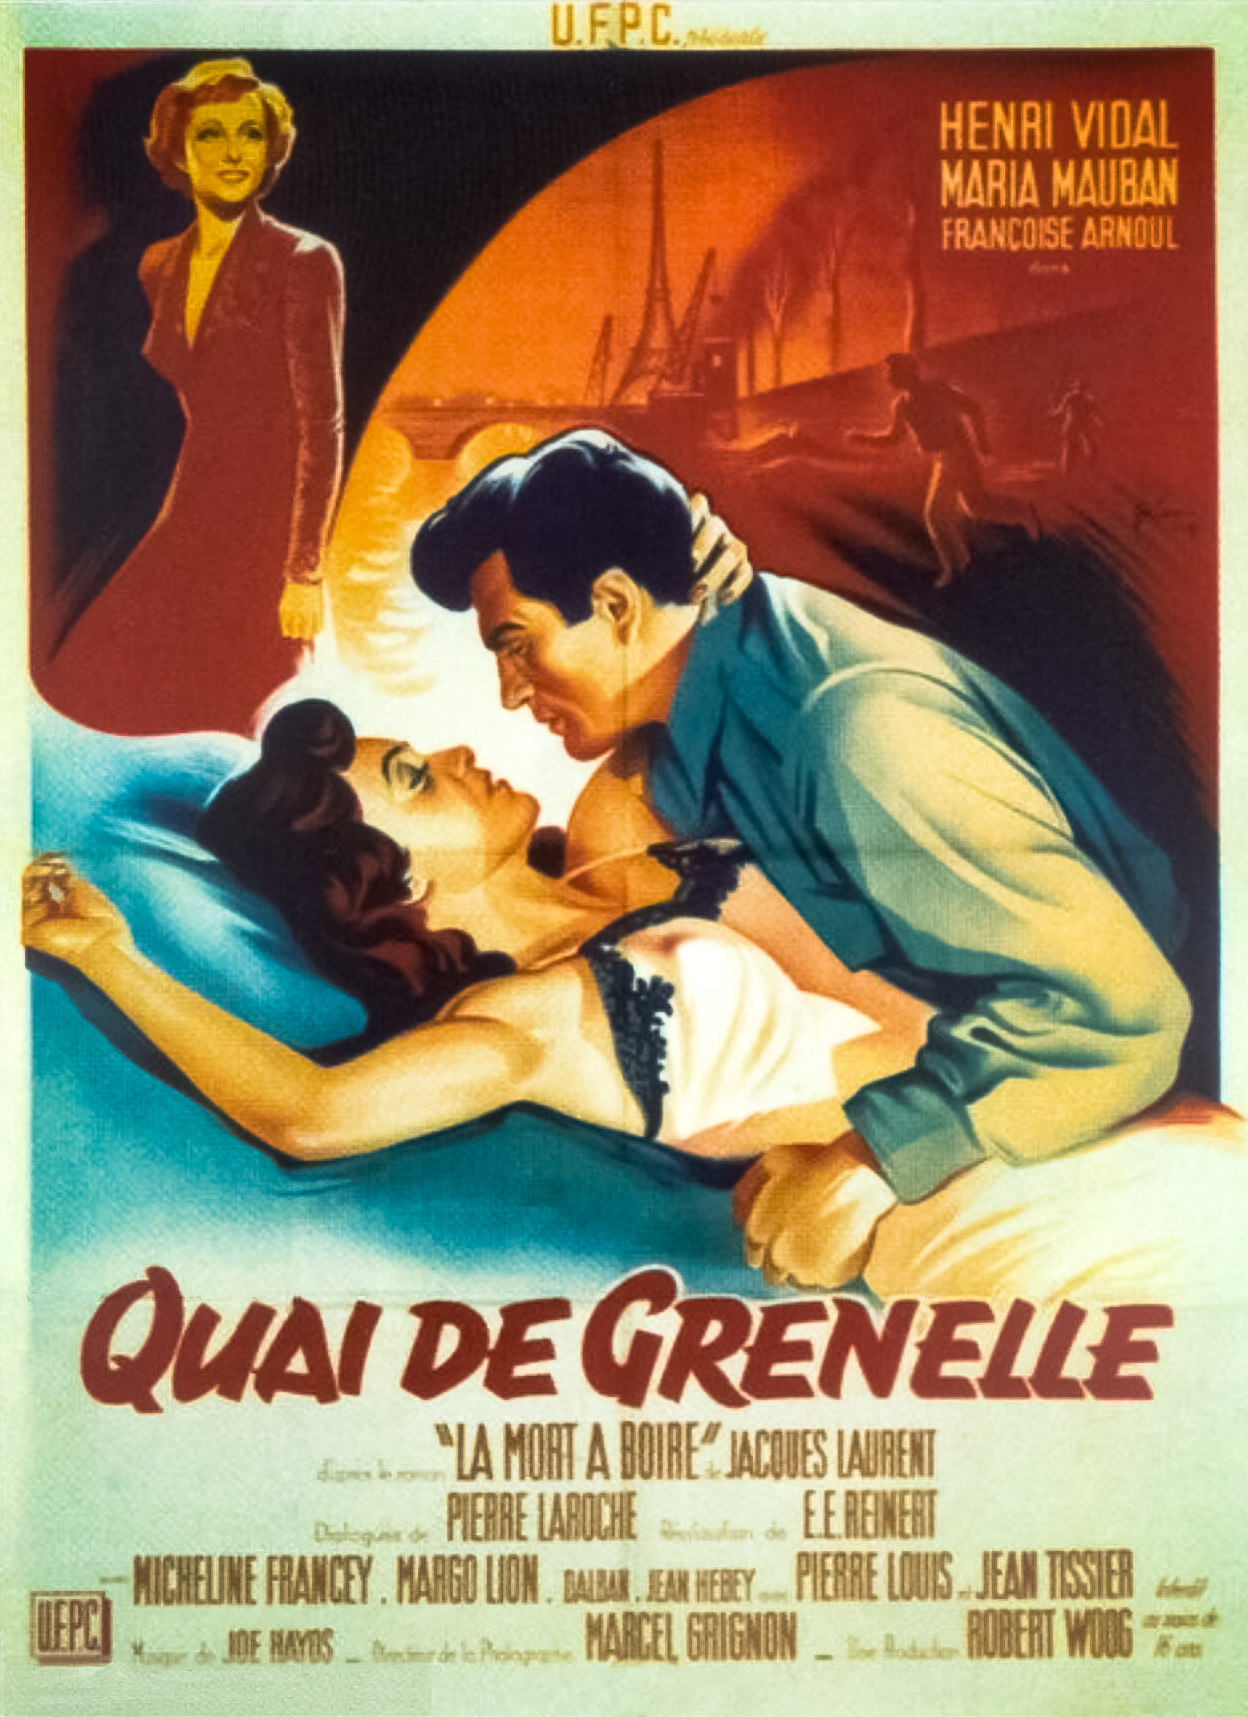 Quay of Grenelle (1950) Screenshot 3 